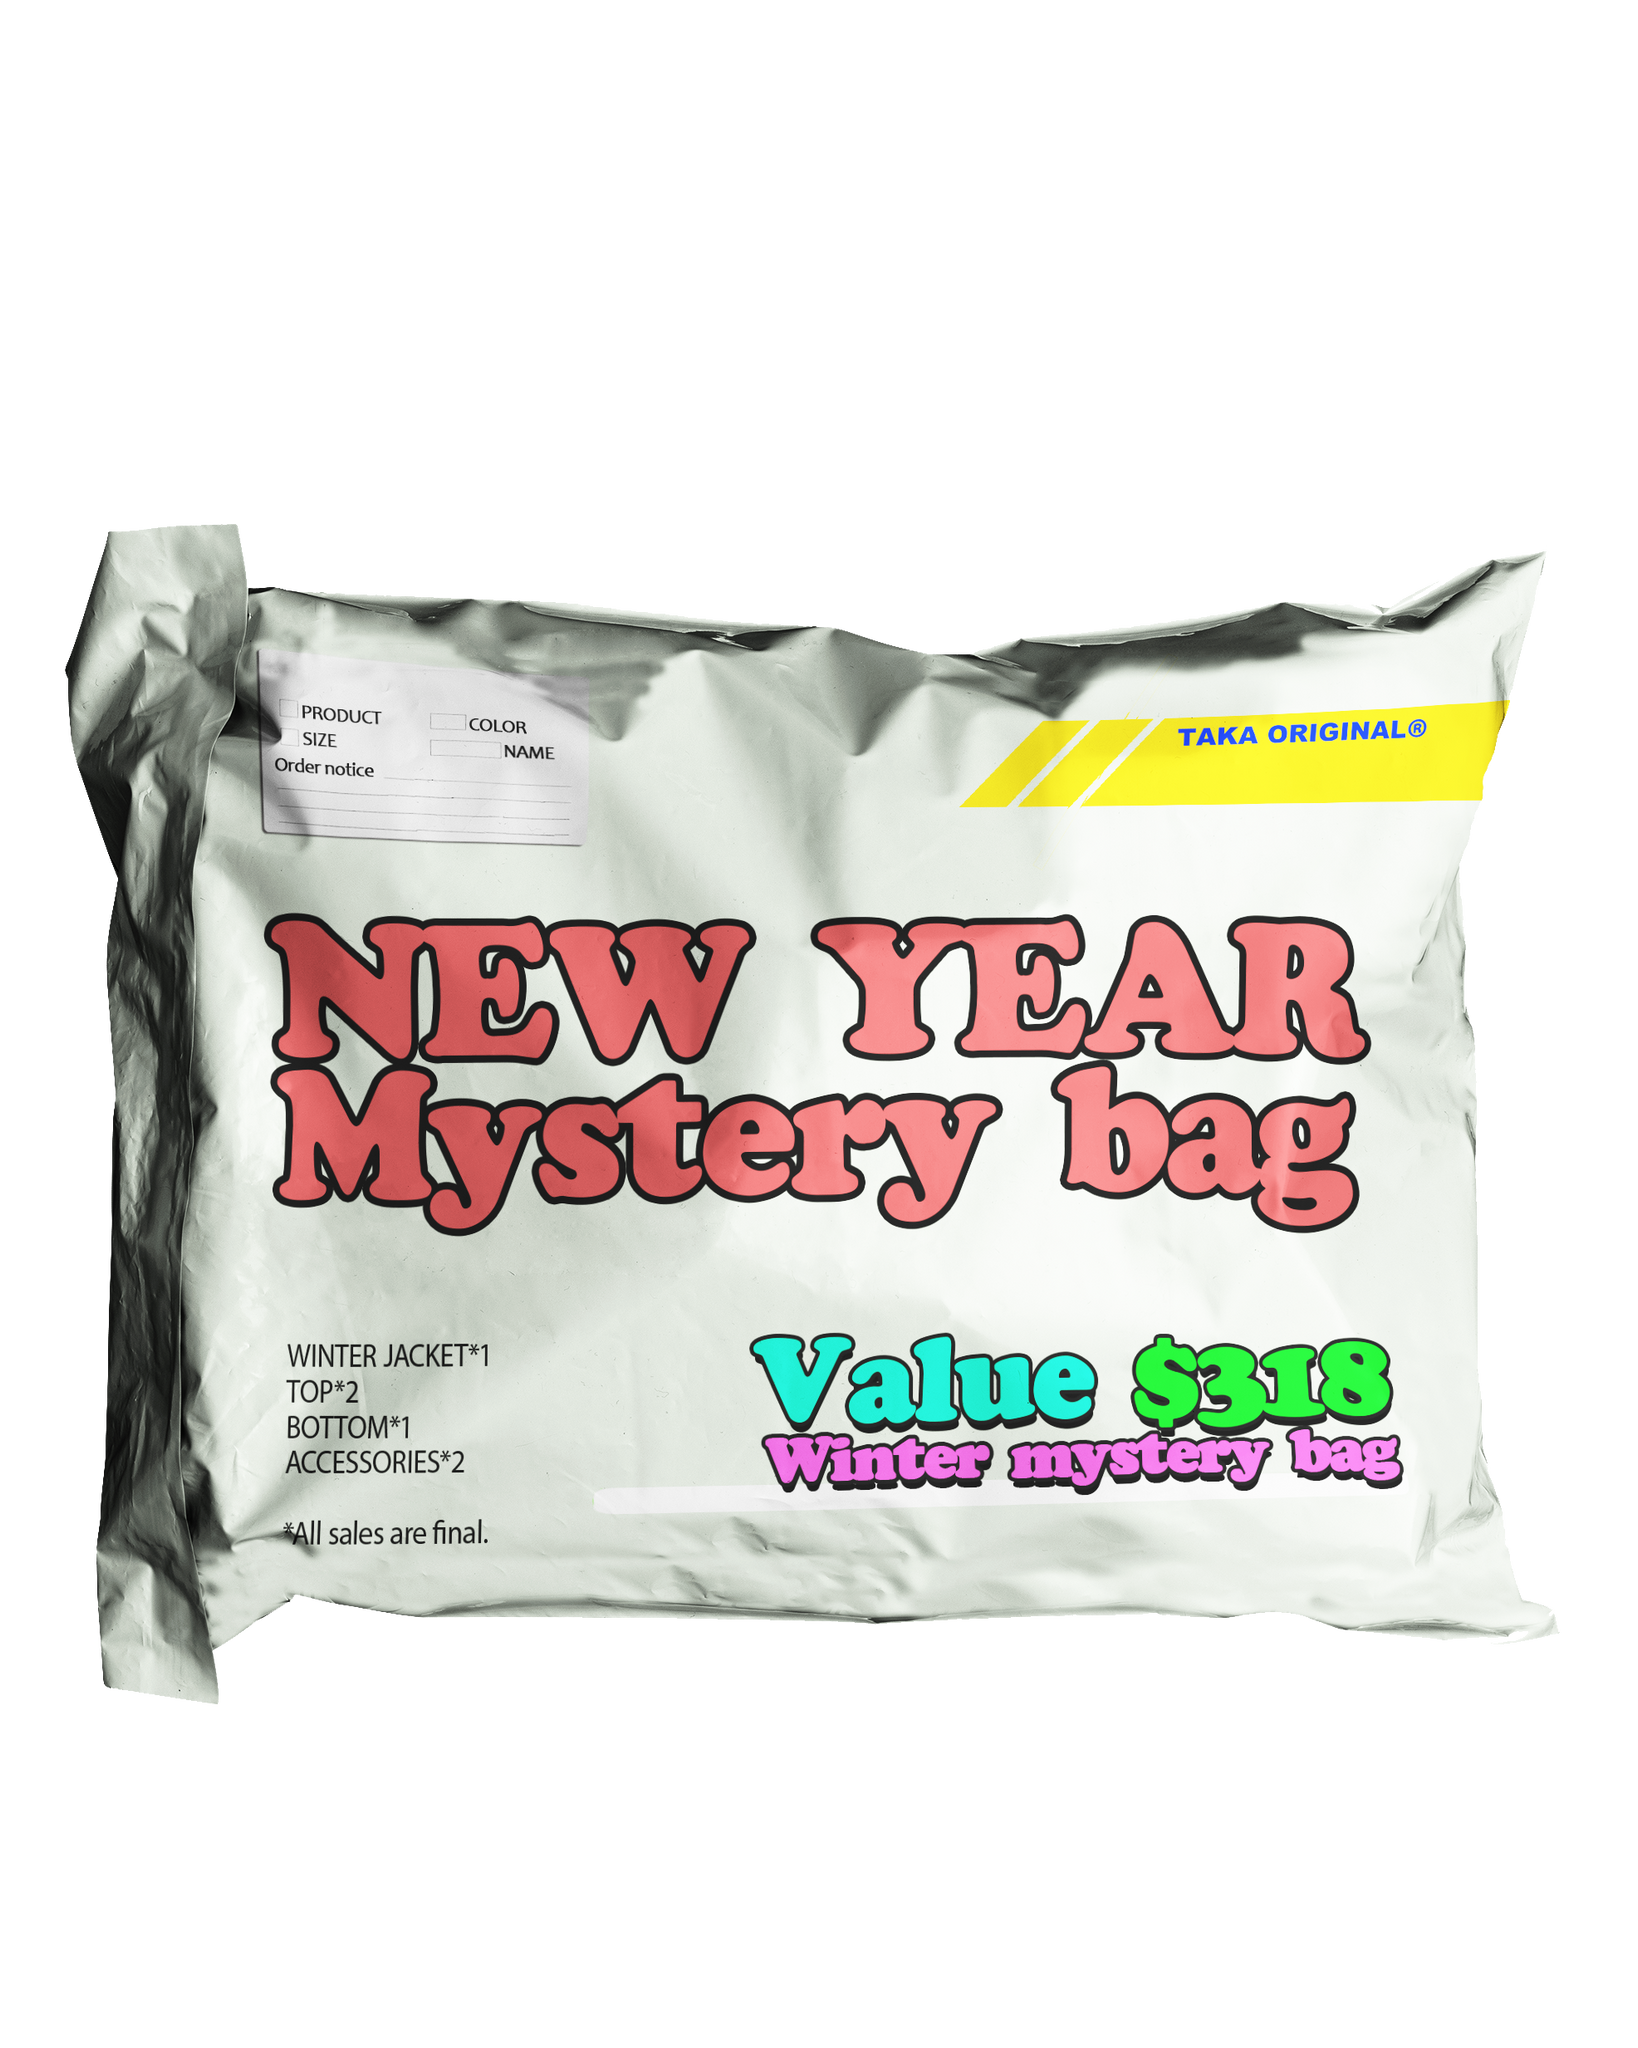 $159 NEW YEAR Winter Mystery lucky bag / Velue $318